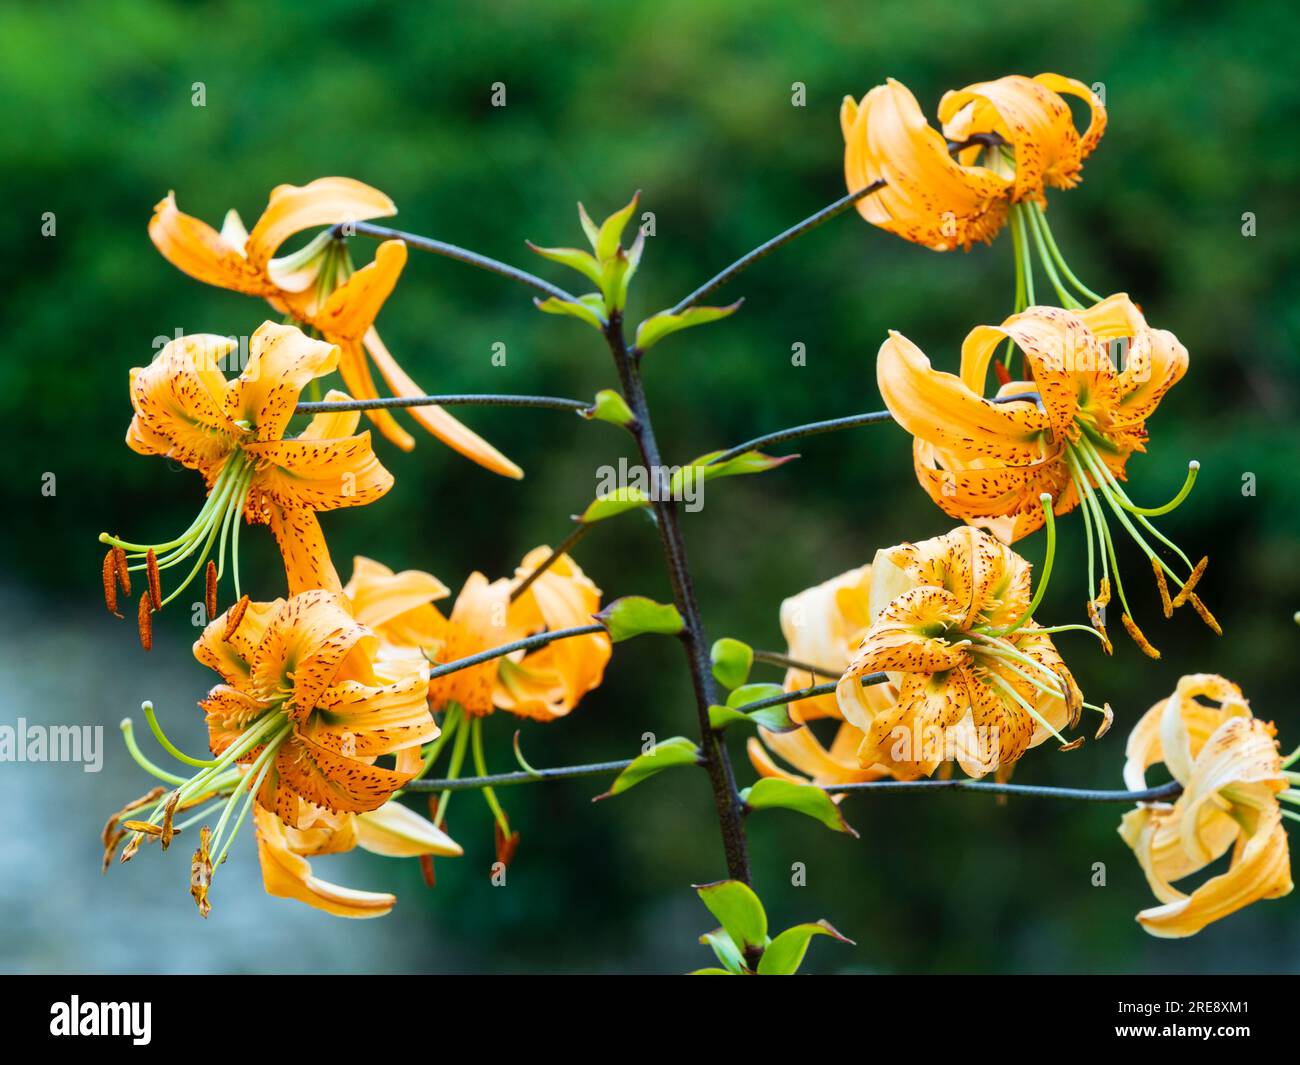 Orange turkscap flowers of the hardy, summer blooming lily, Lilium henryi Stock Photo